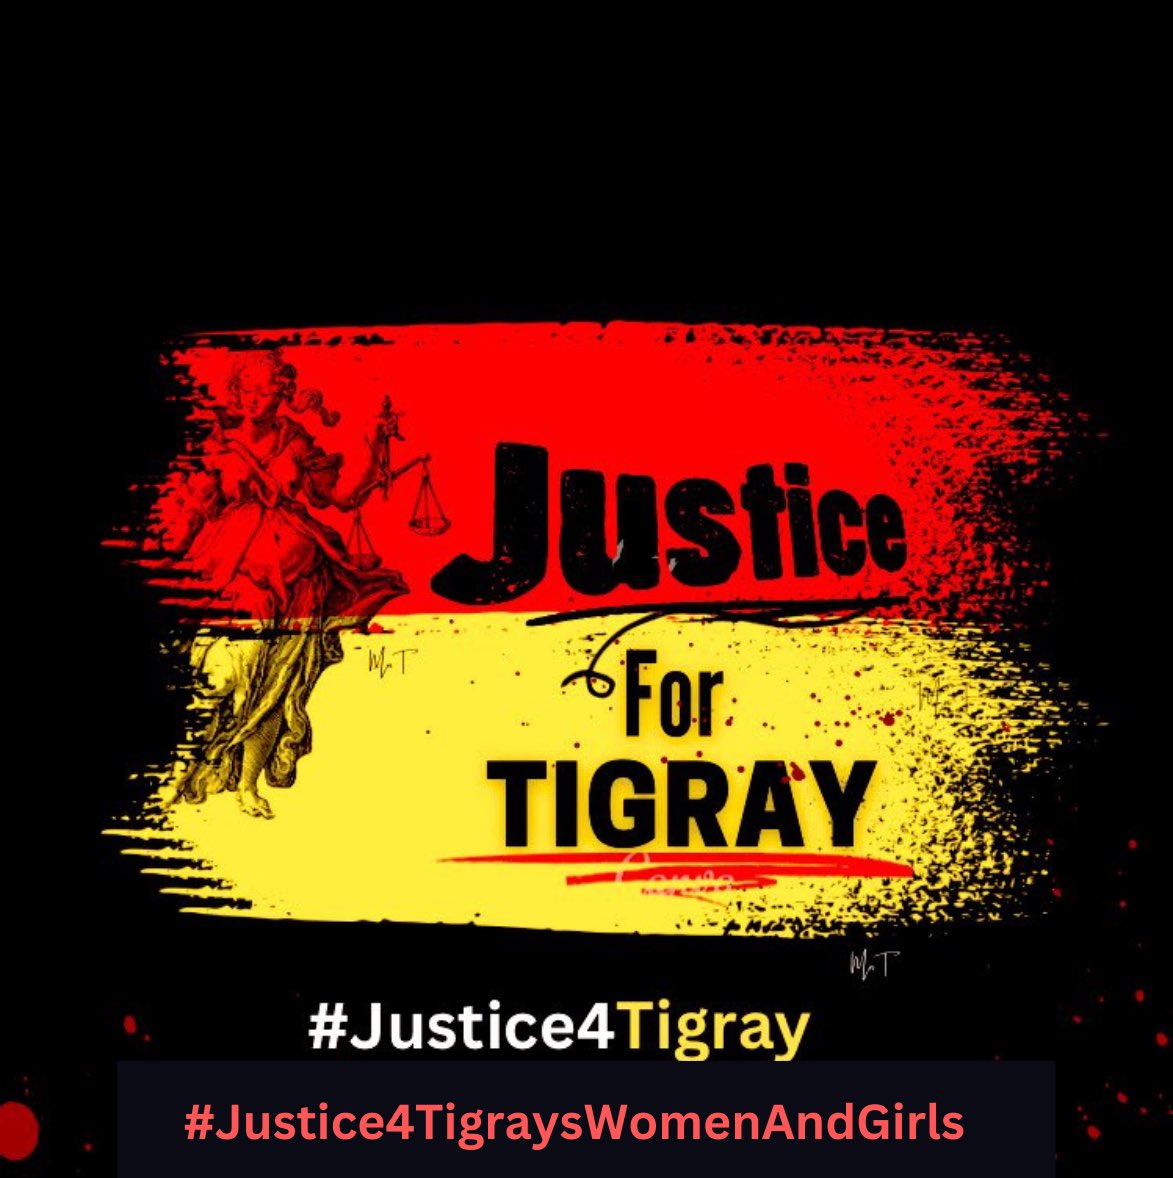 @Tse2mu @TDF1254 @UN_HRC @EUCouncil @UNWomenWatch @NDIWomen @endrapeinwar @UN 🇪🇷n and Amhara militias subjected continue on Tigrayan women & girls to rape, sexual mutilation & other forms of torture,often using ethnic slurs & killing. #Justice4TigraysWomenAndGirls #TigrayGenocide @UN_HRC @EUCouncil @UNWomenWatch @NDIWomen @endrapeinwar @UN @TDFfikir